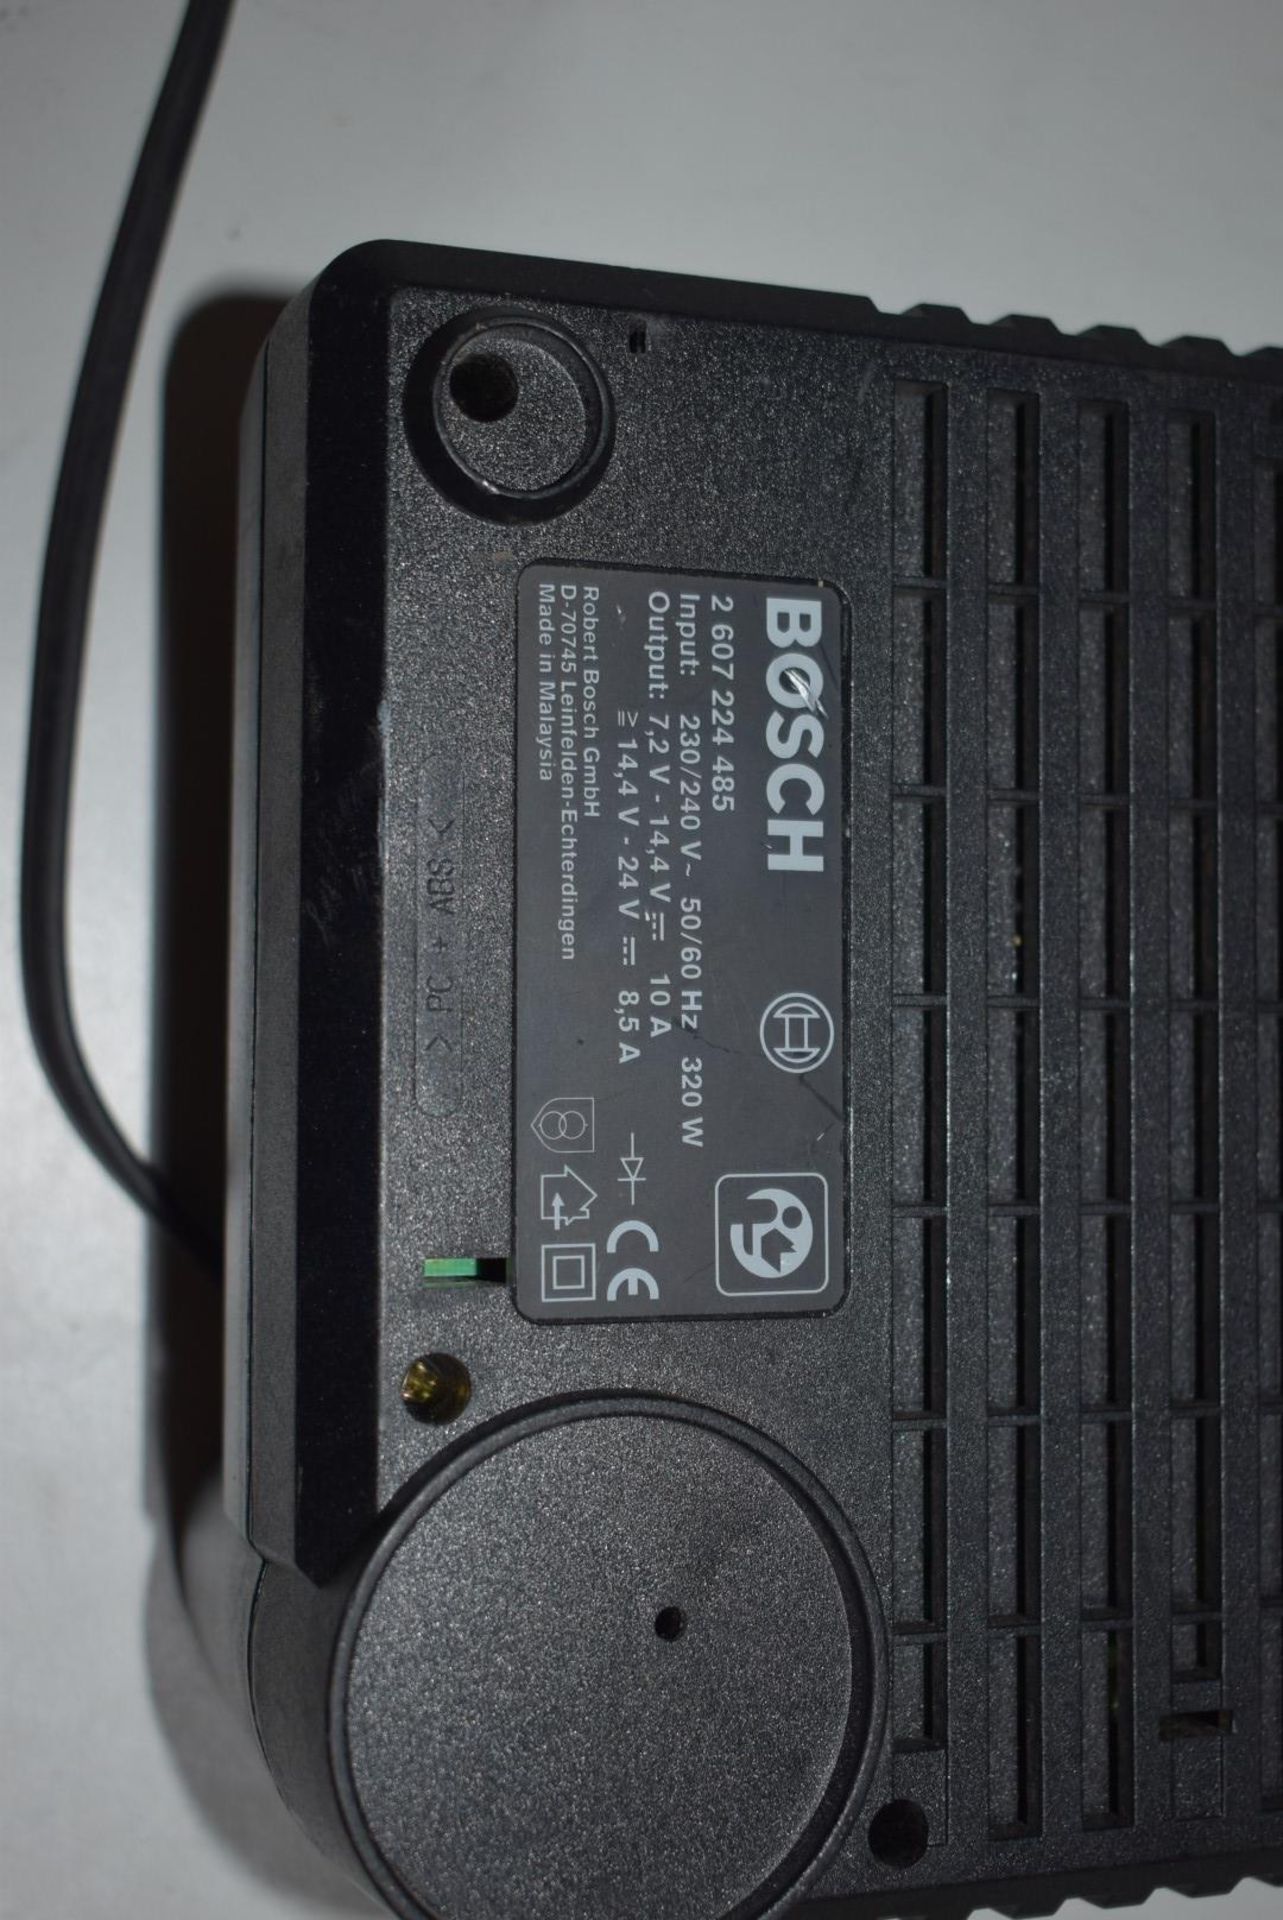 1 x BOSCH AL 15 FC Fast Charger For NiCd NiMH Batteries (7.2v - 24v) - Original RRP £48.00 - Ref: - Image 2 of 2